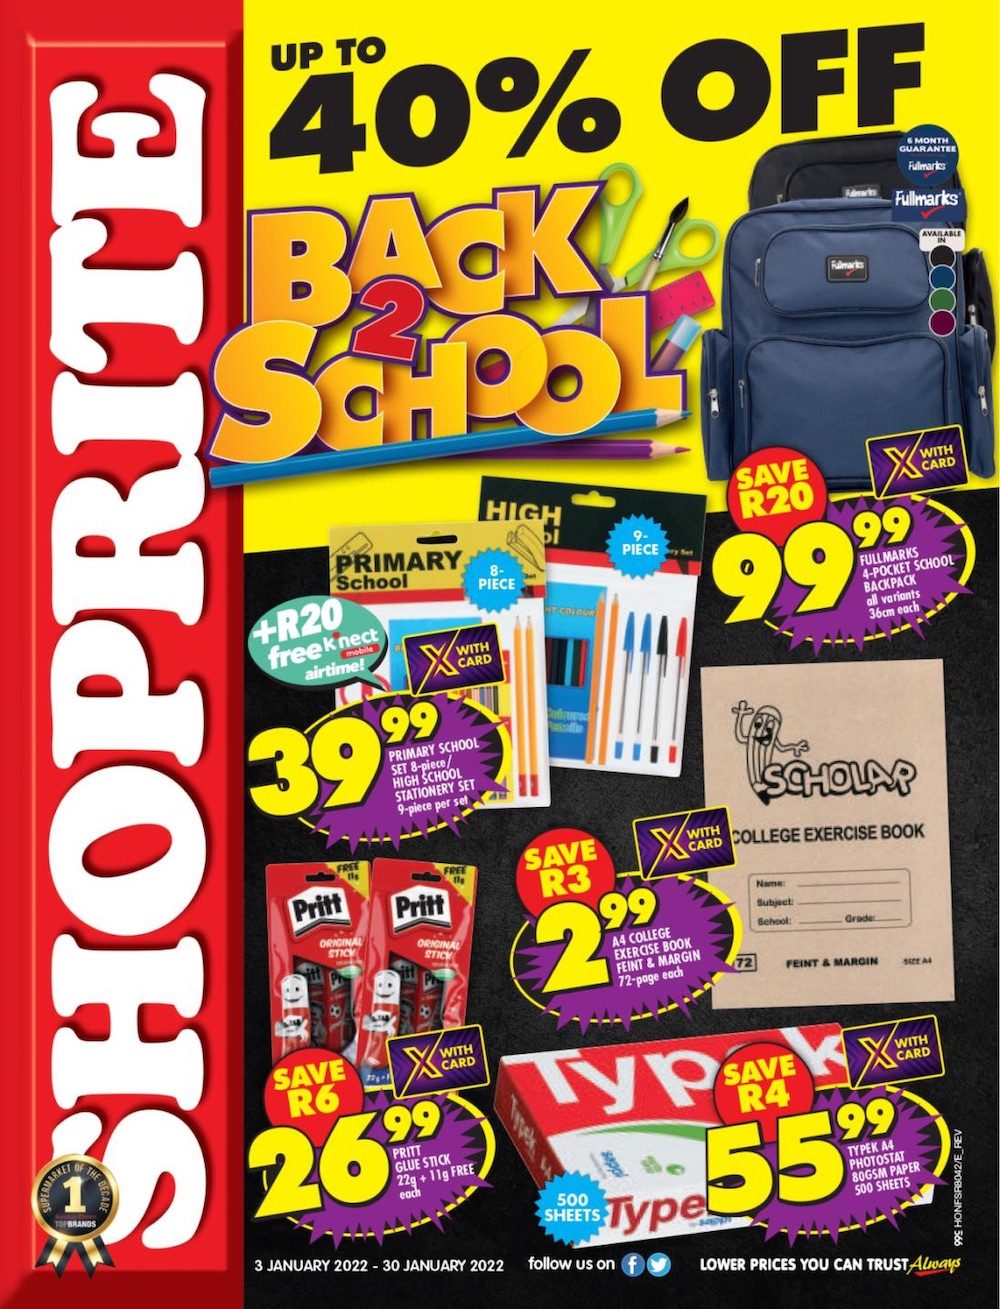 Shoprite Catalogue Back to School 2022 | Shoprite Specials | South Africa